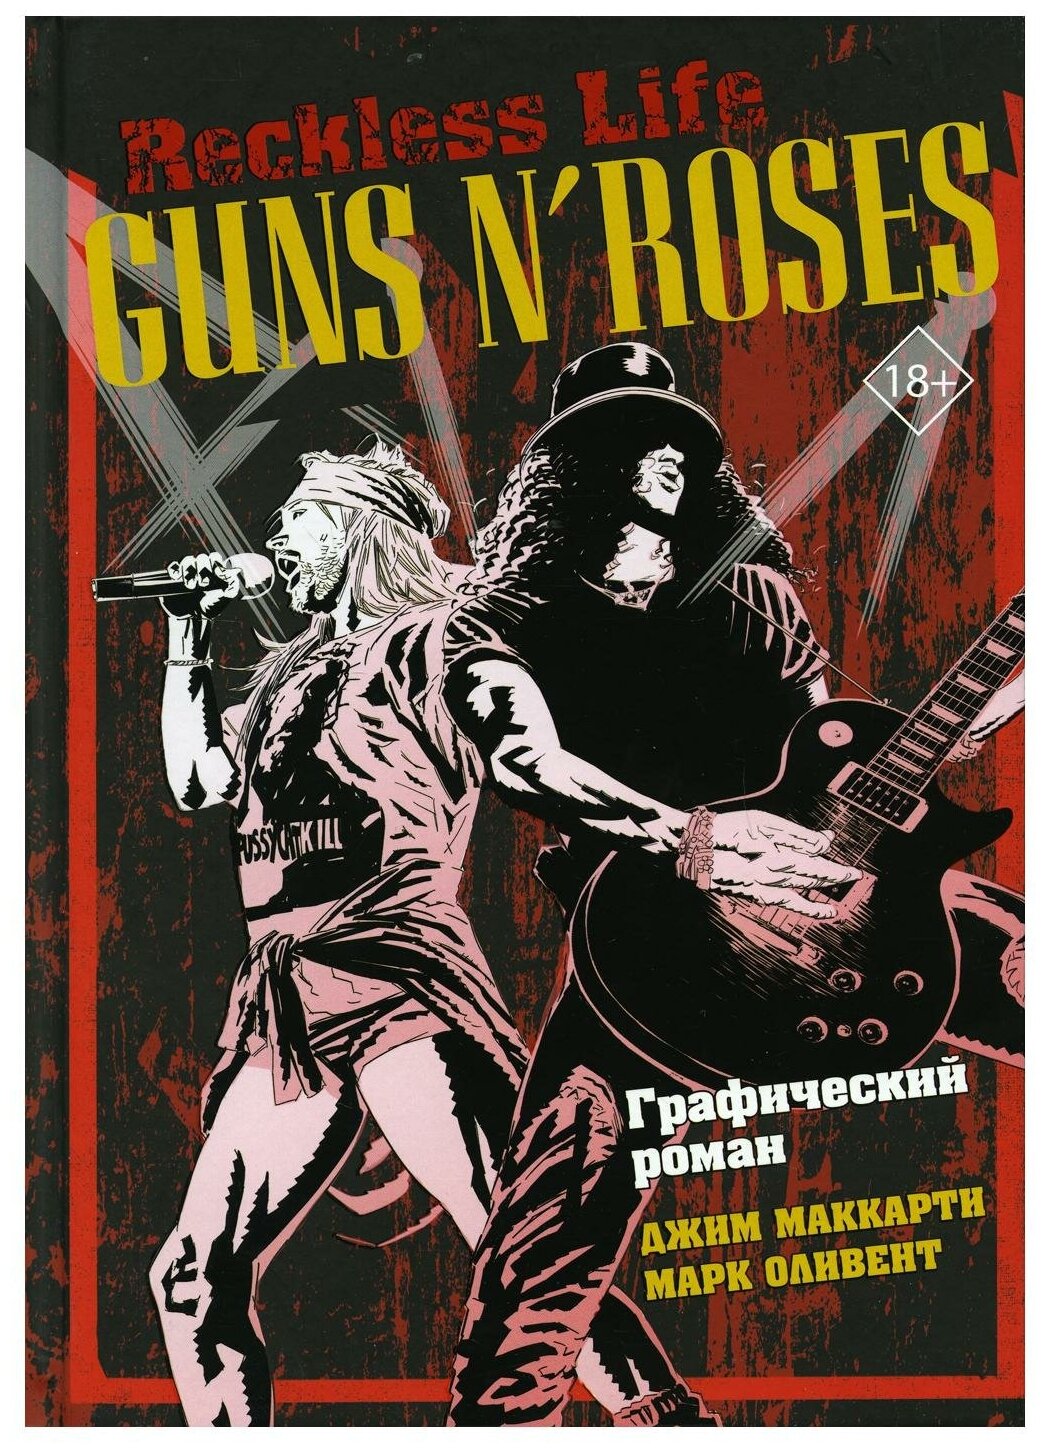 Guns N’ Roses: Reckless life. Графический роман - фото №1